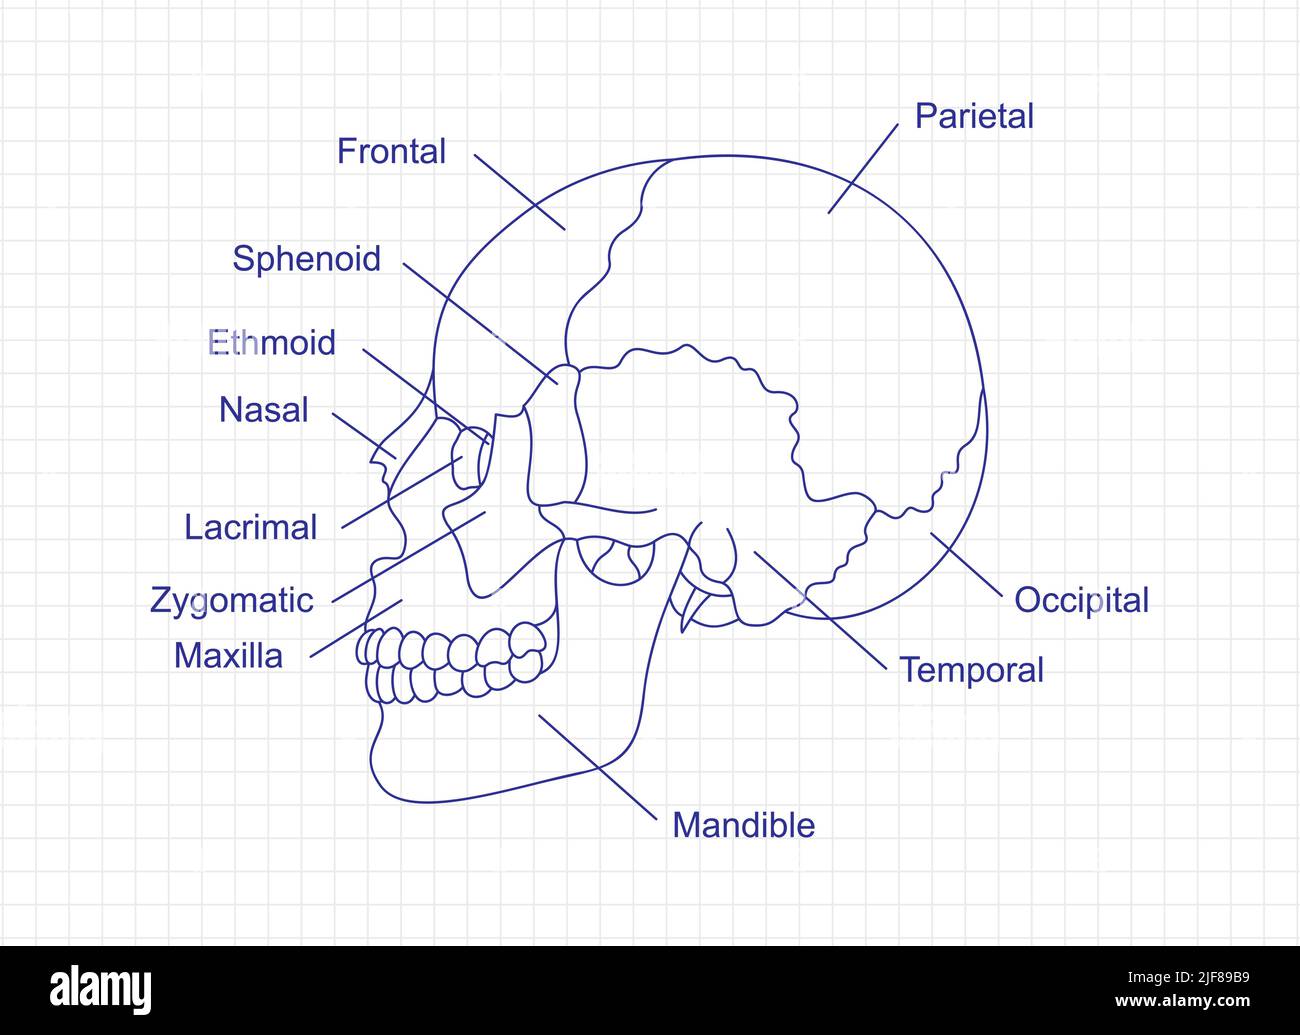 Human skull bones anatomy drawing with a pen on notebook. Cranial parts structure diagram with bones description. Human internal organ illustration. Stock Vector